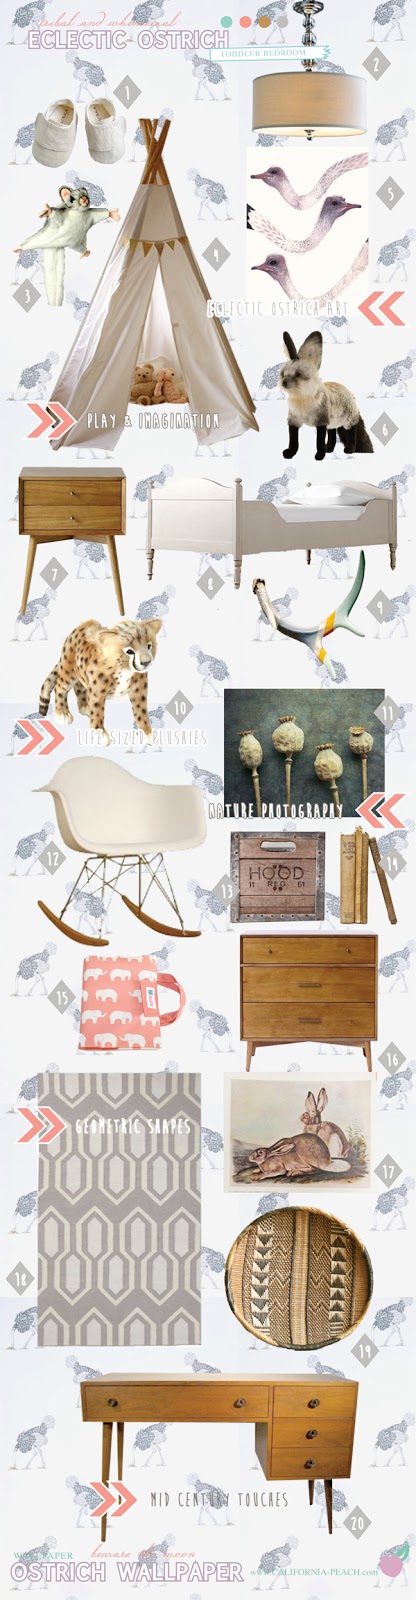 Ecclectic Ostrich || on California Peach || Toddler Room Style Interior Design Board